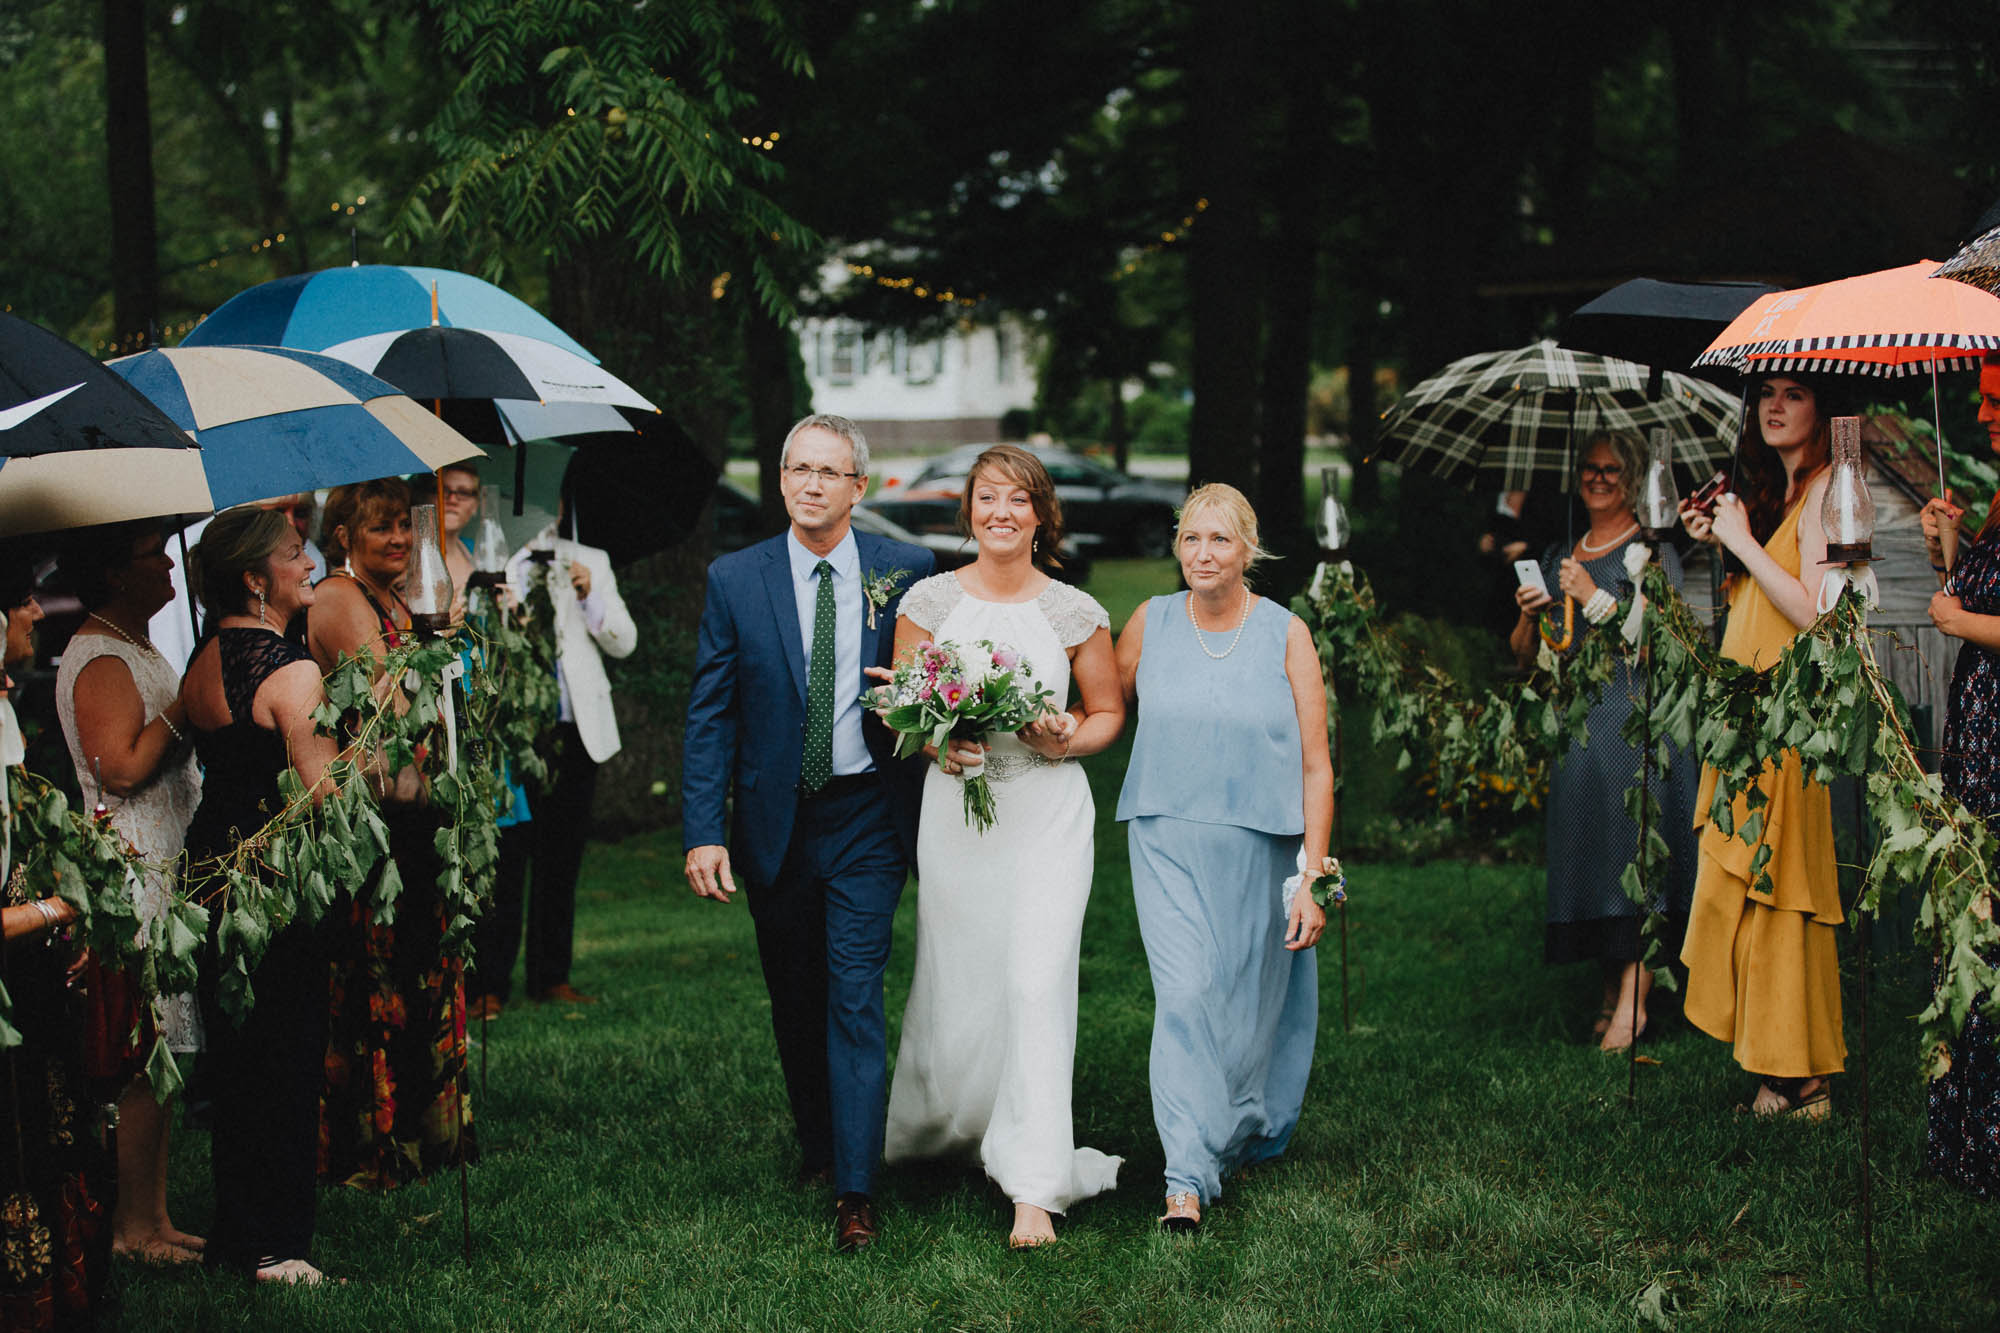 Leah-Graham-Michigan-Outdoor-DIY-Wedding-047@2x.jpg